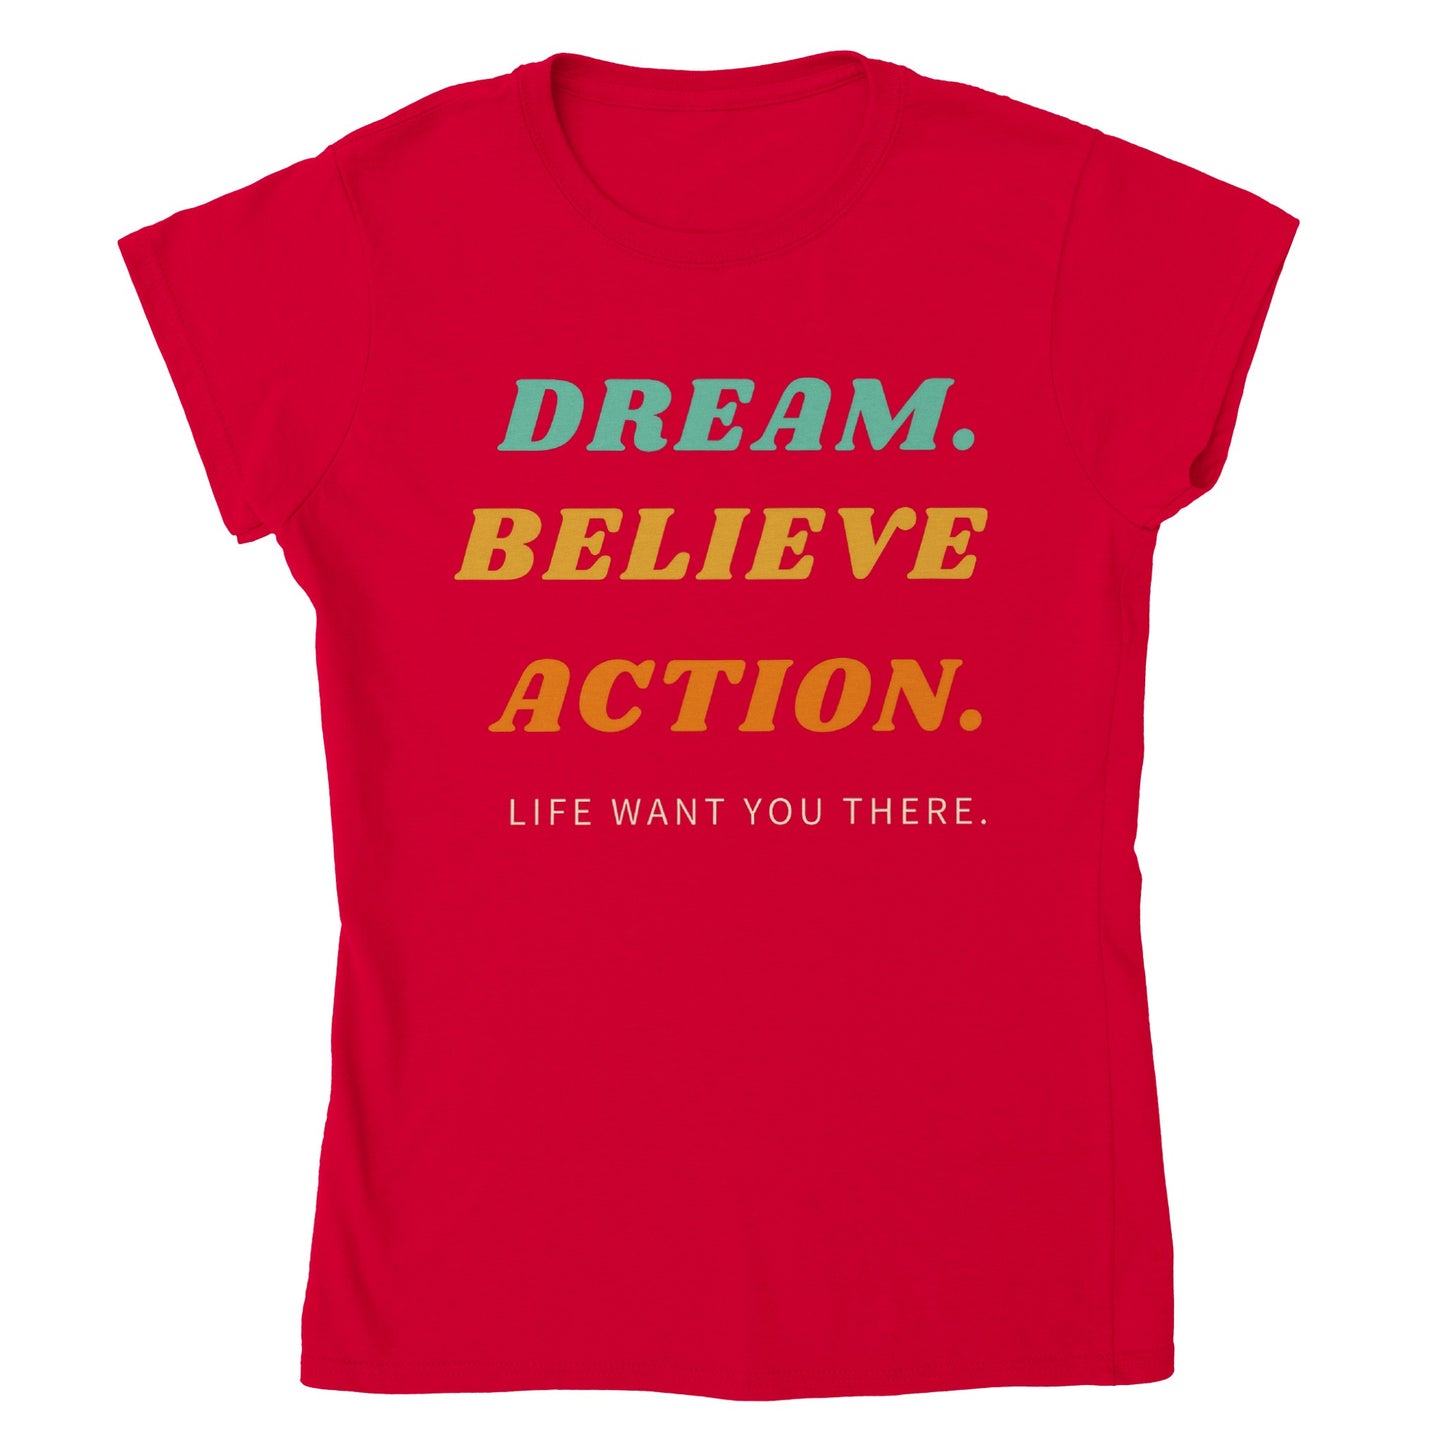 DREAM, BELIEVE,ACTION T-SHIRT